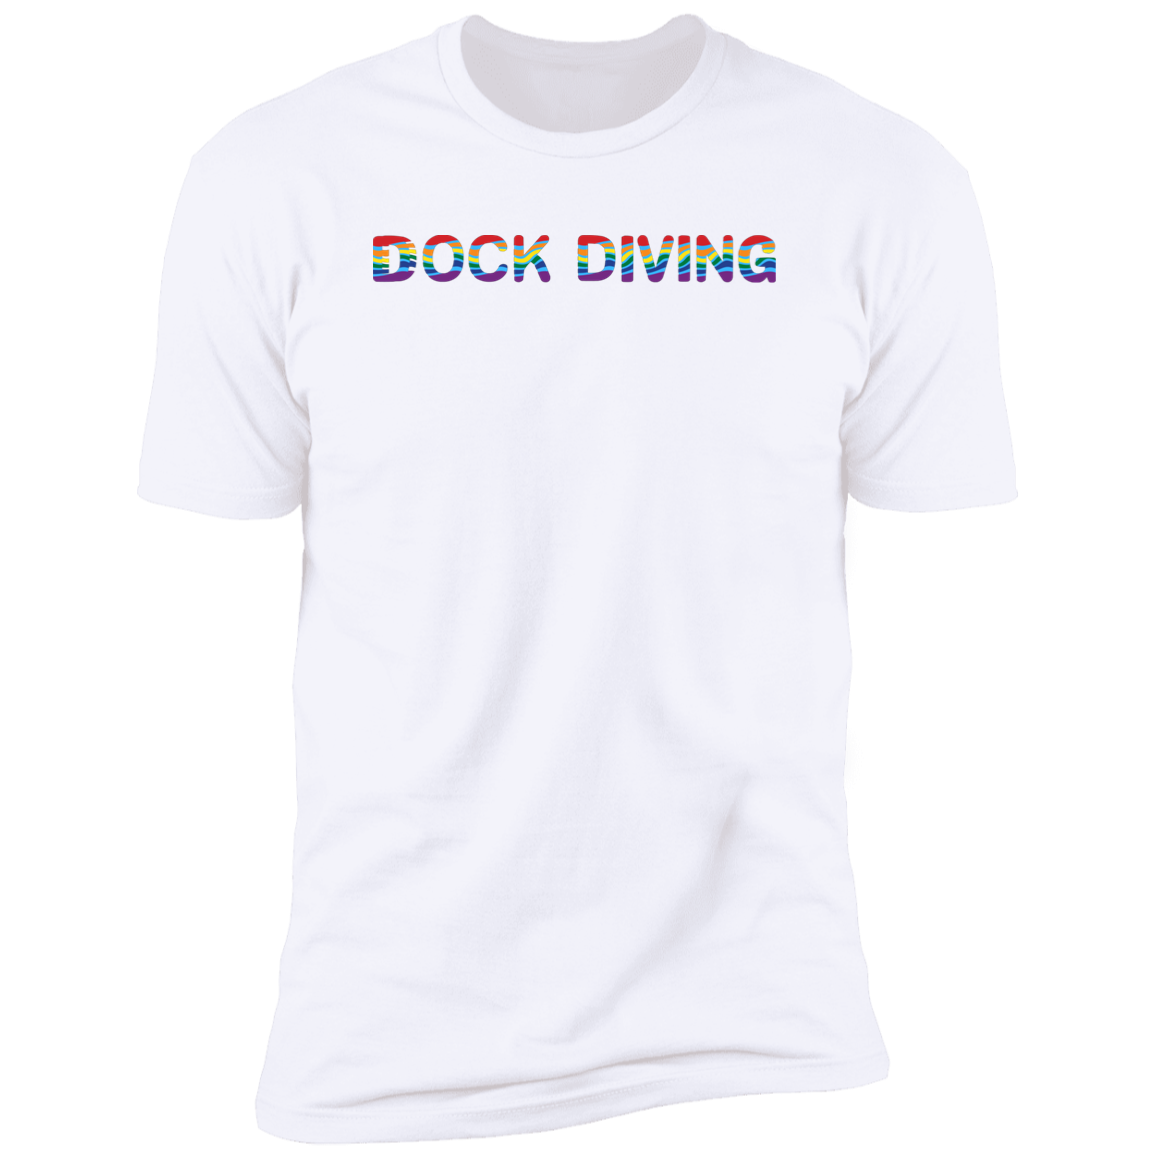 Dock Diving Pride Dock diving t-shirt, dog pride dock diving shirt for humans, in white